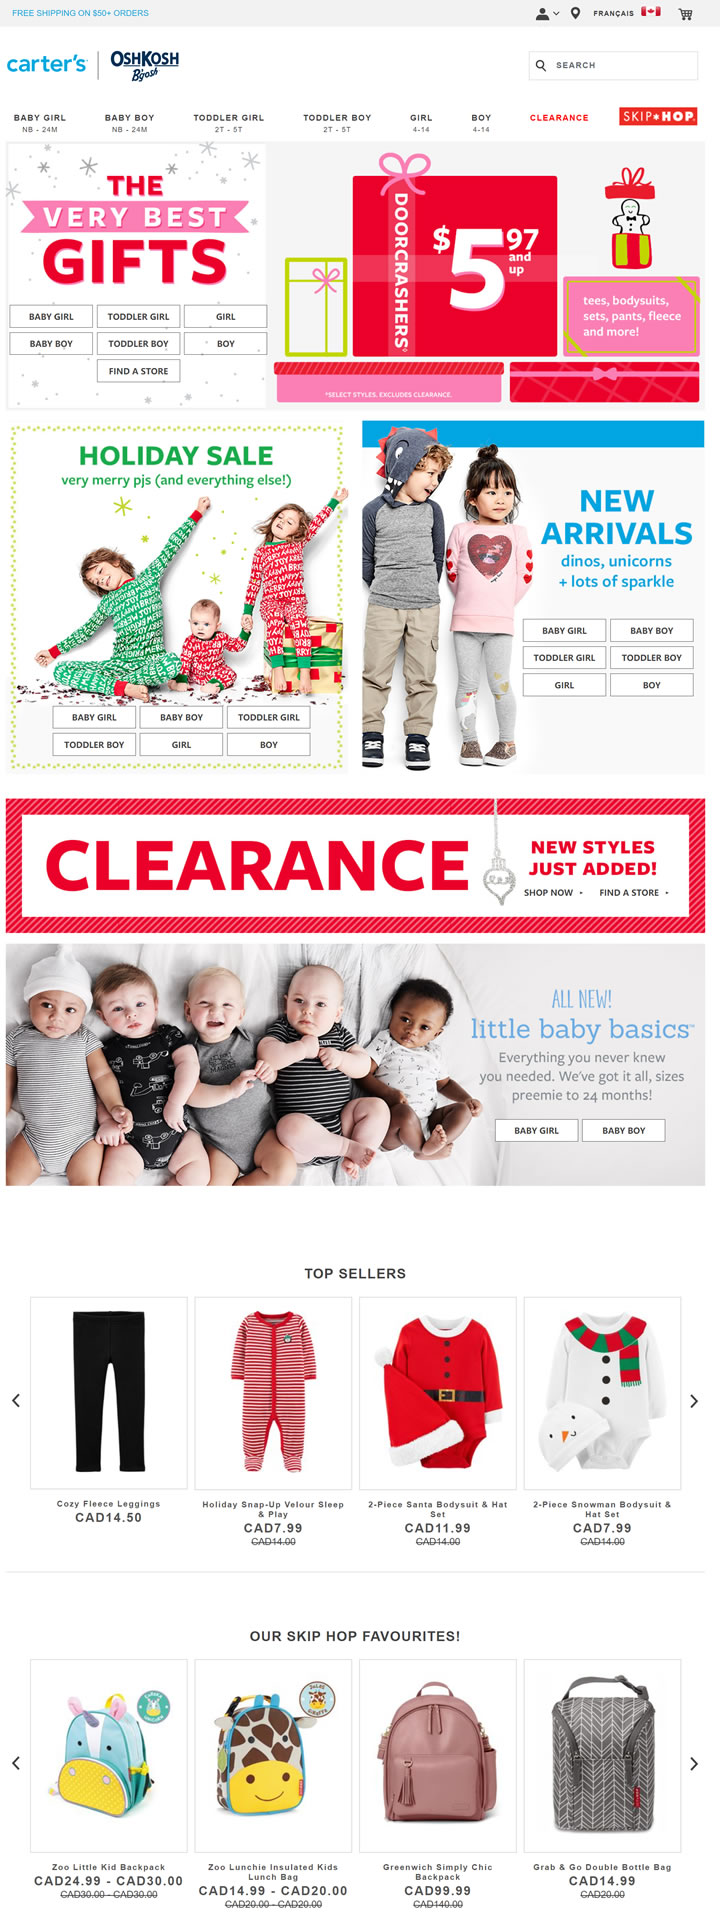 Carter’s OshKosh加拿大：购买婴幼儿服装和童装